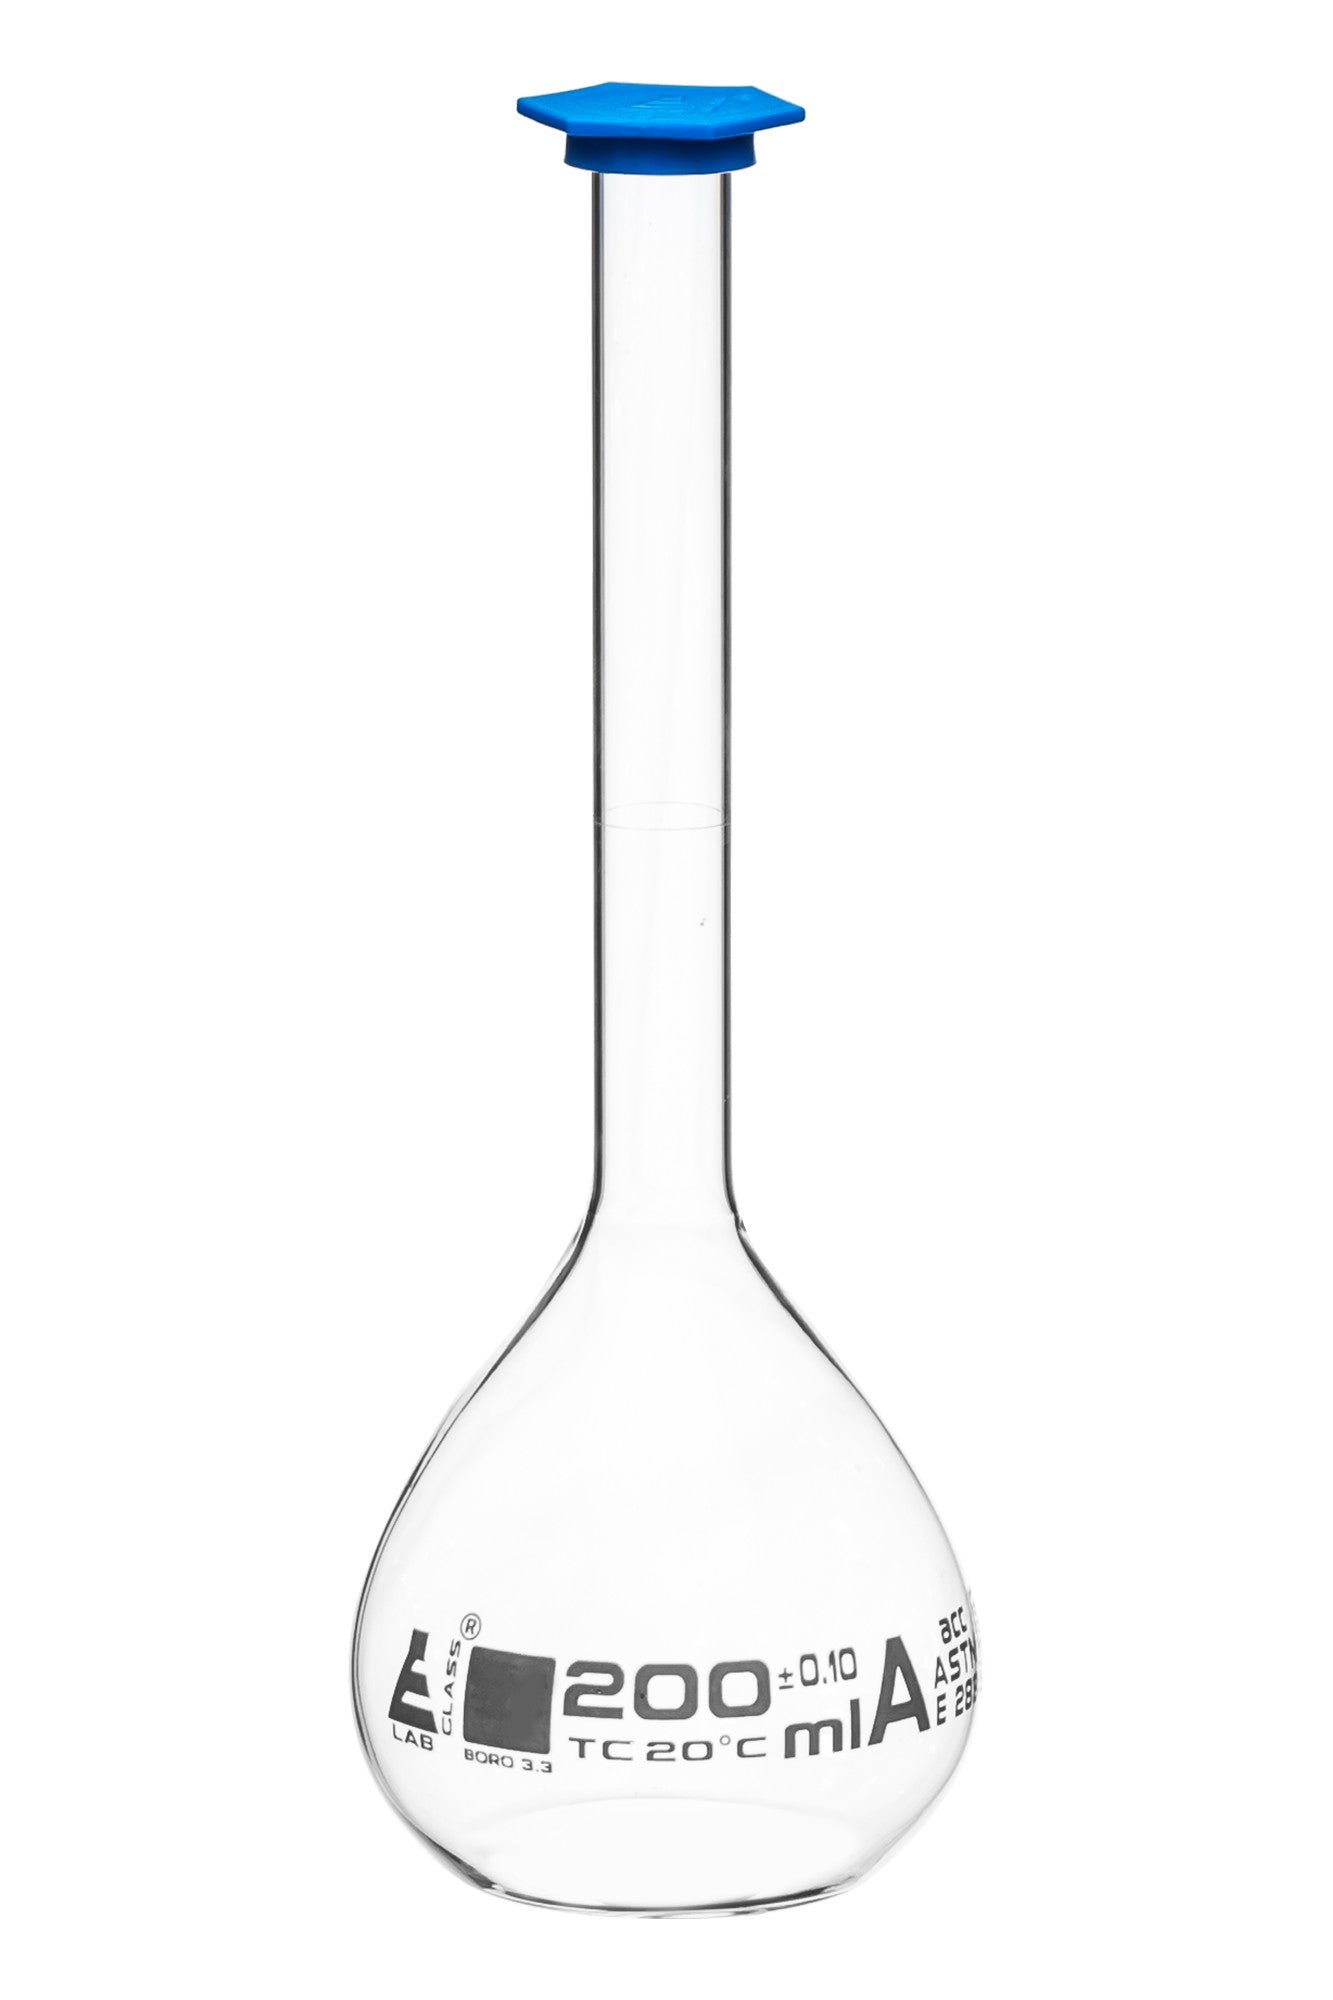 Borosilicate Volumetric Flask with Polyethylene Snap Cap, 200 ml, Class A, White Print, ASTM, Autoclavable